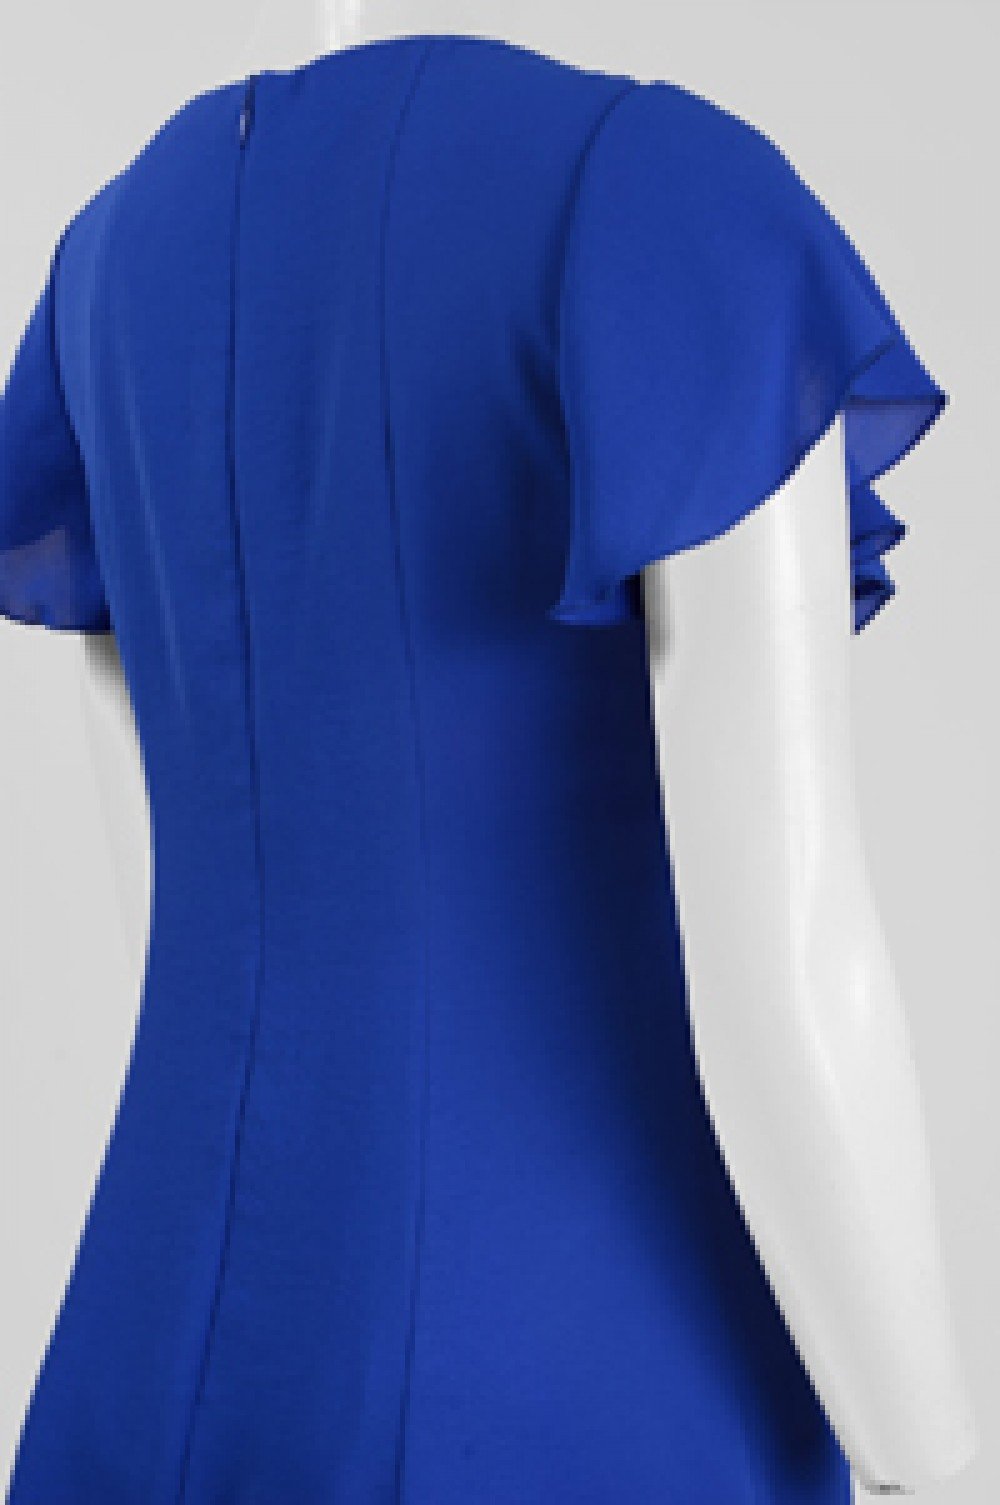 Adrianna Papell - AP1D101048 Ruffled V-Neck A-Line Short Dress In Blue